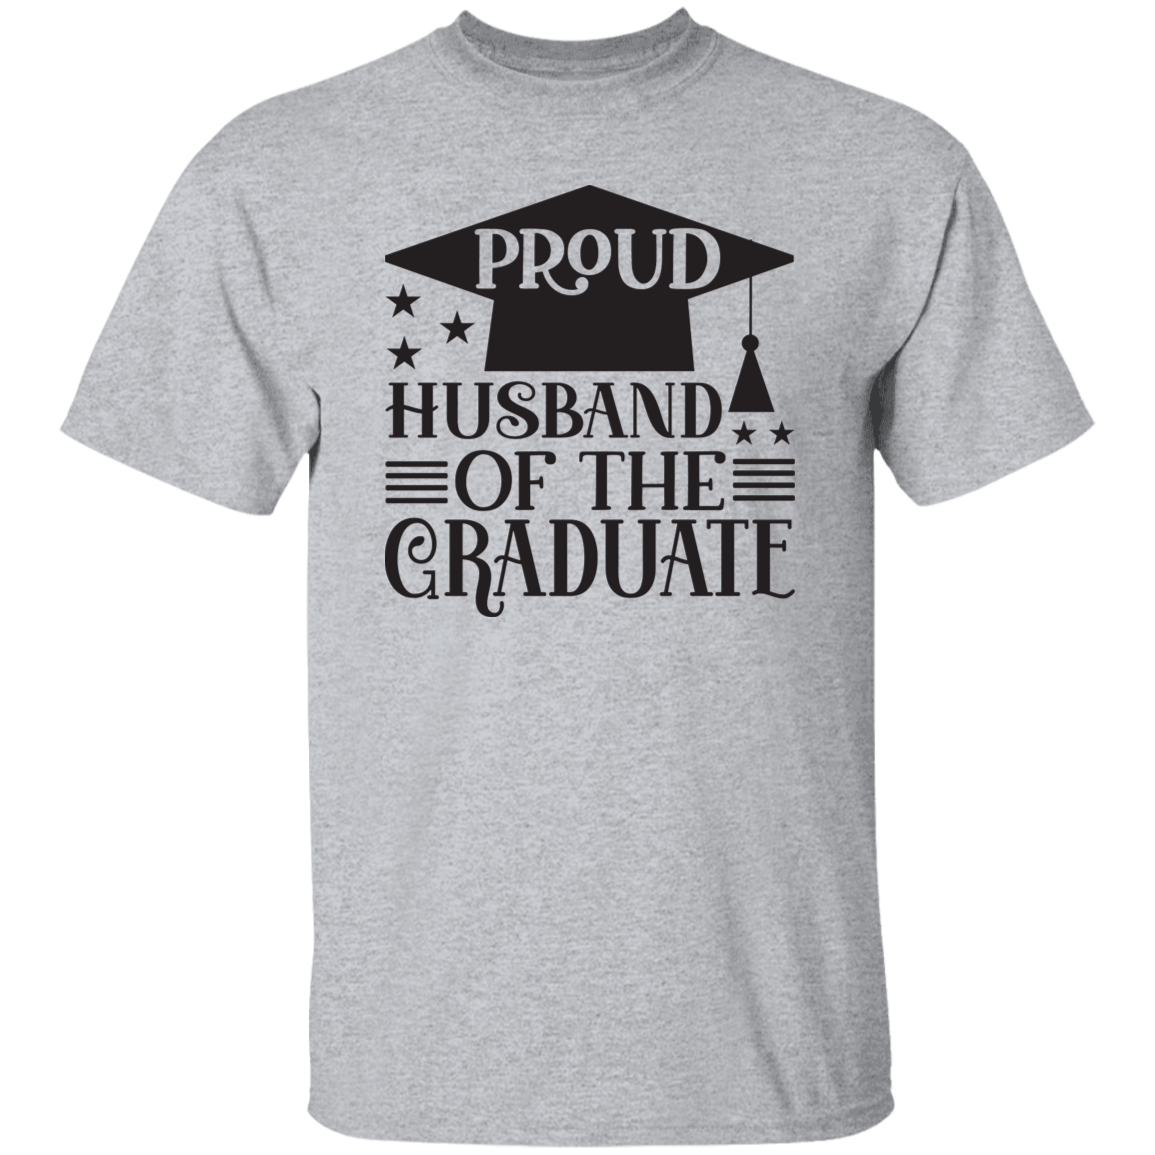 Husband of the Graduate 5.3 oz. T-Shirt